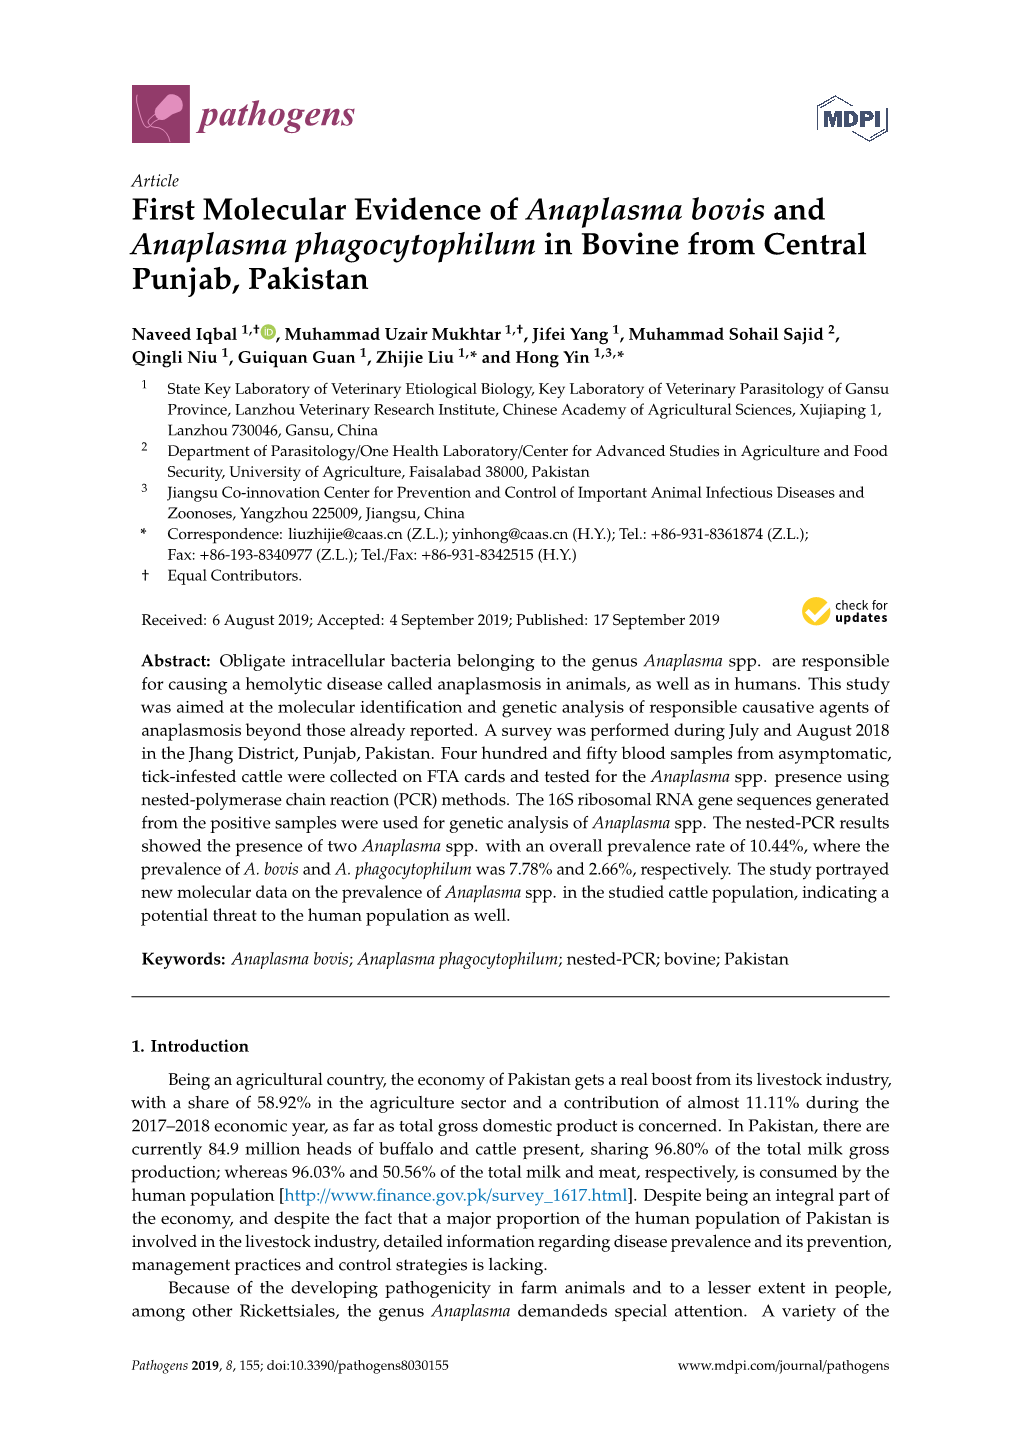 First Molecular Evidence of Anaplasma Bovis and Anaplasma Phagocytophilum in Bovine from Central Punjab, Pakistan